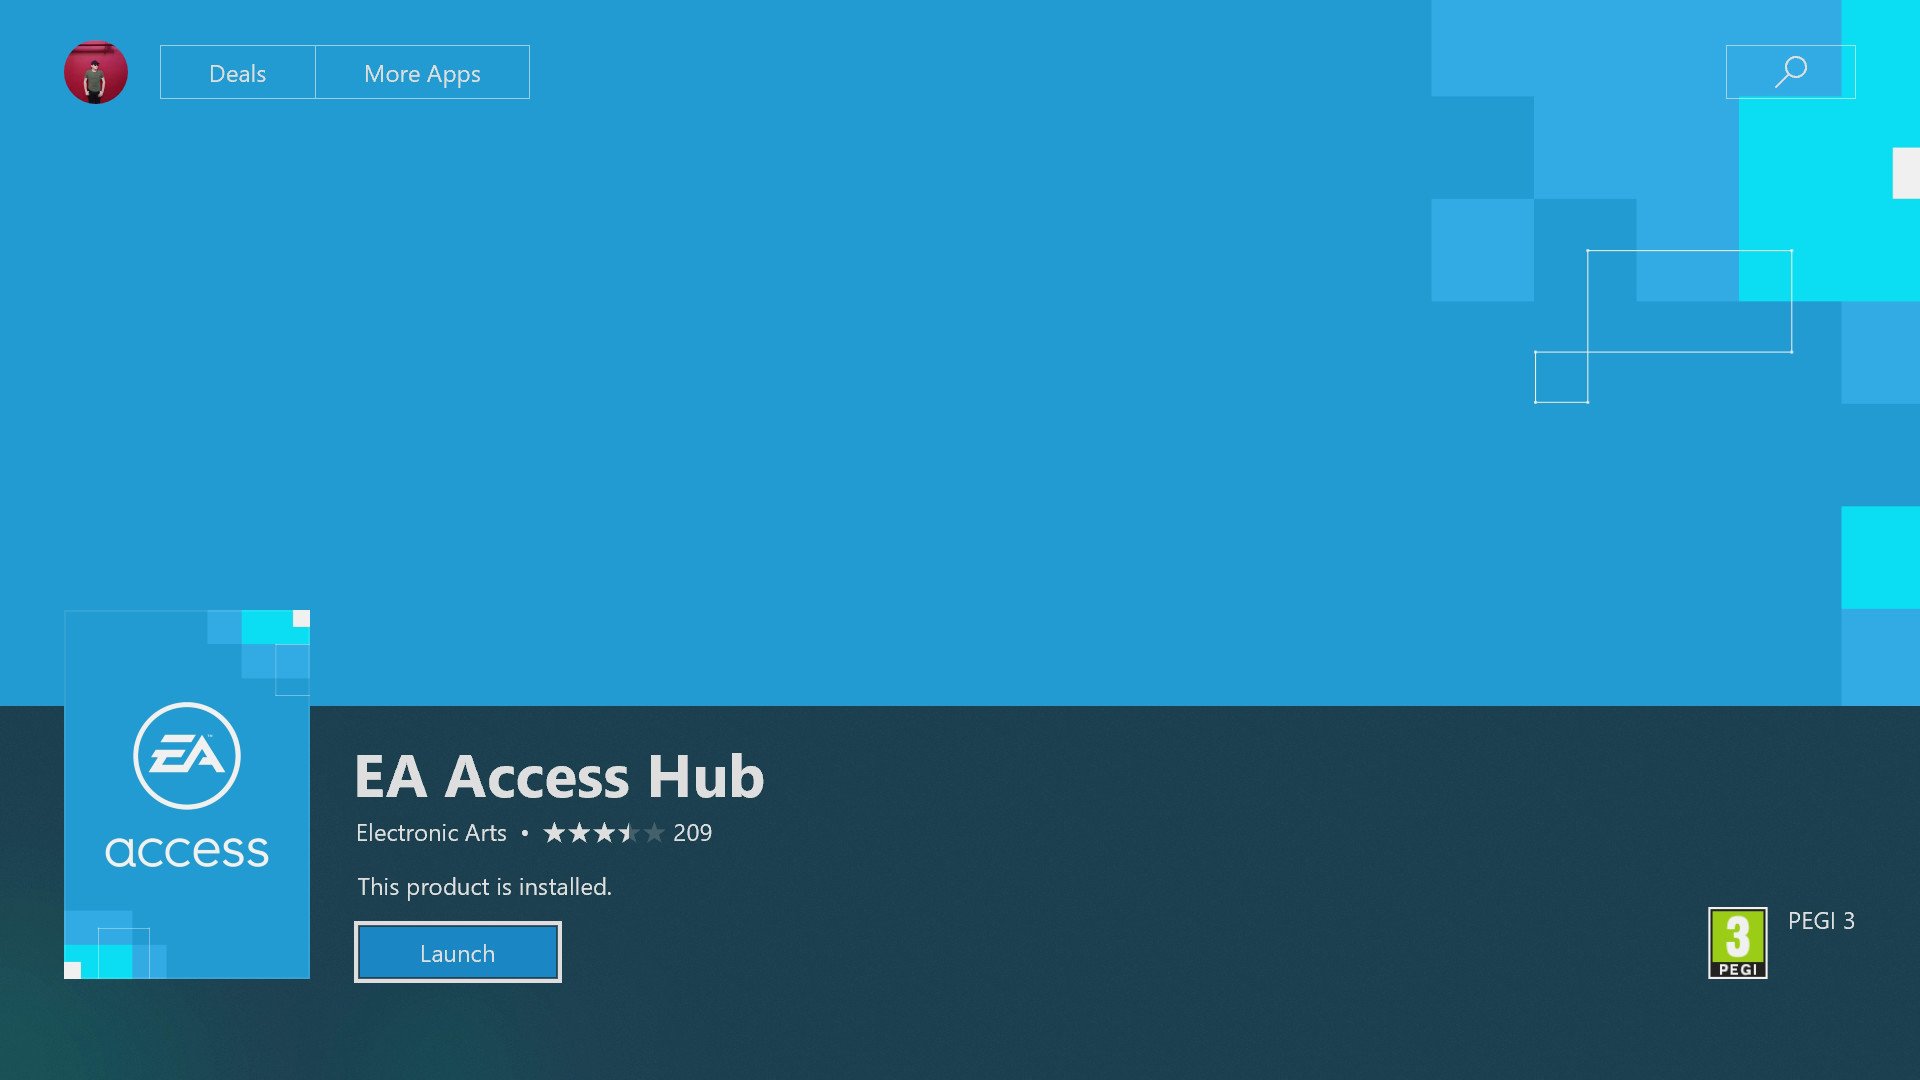 Access hub